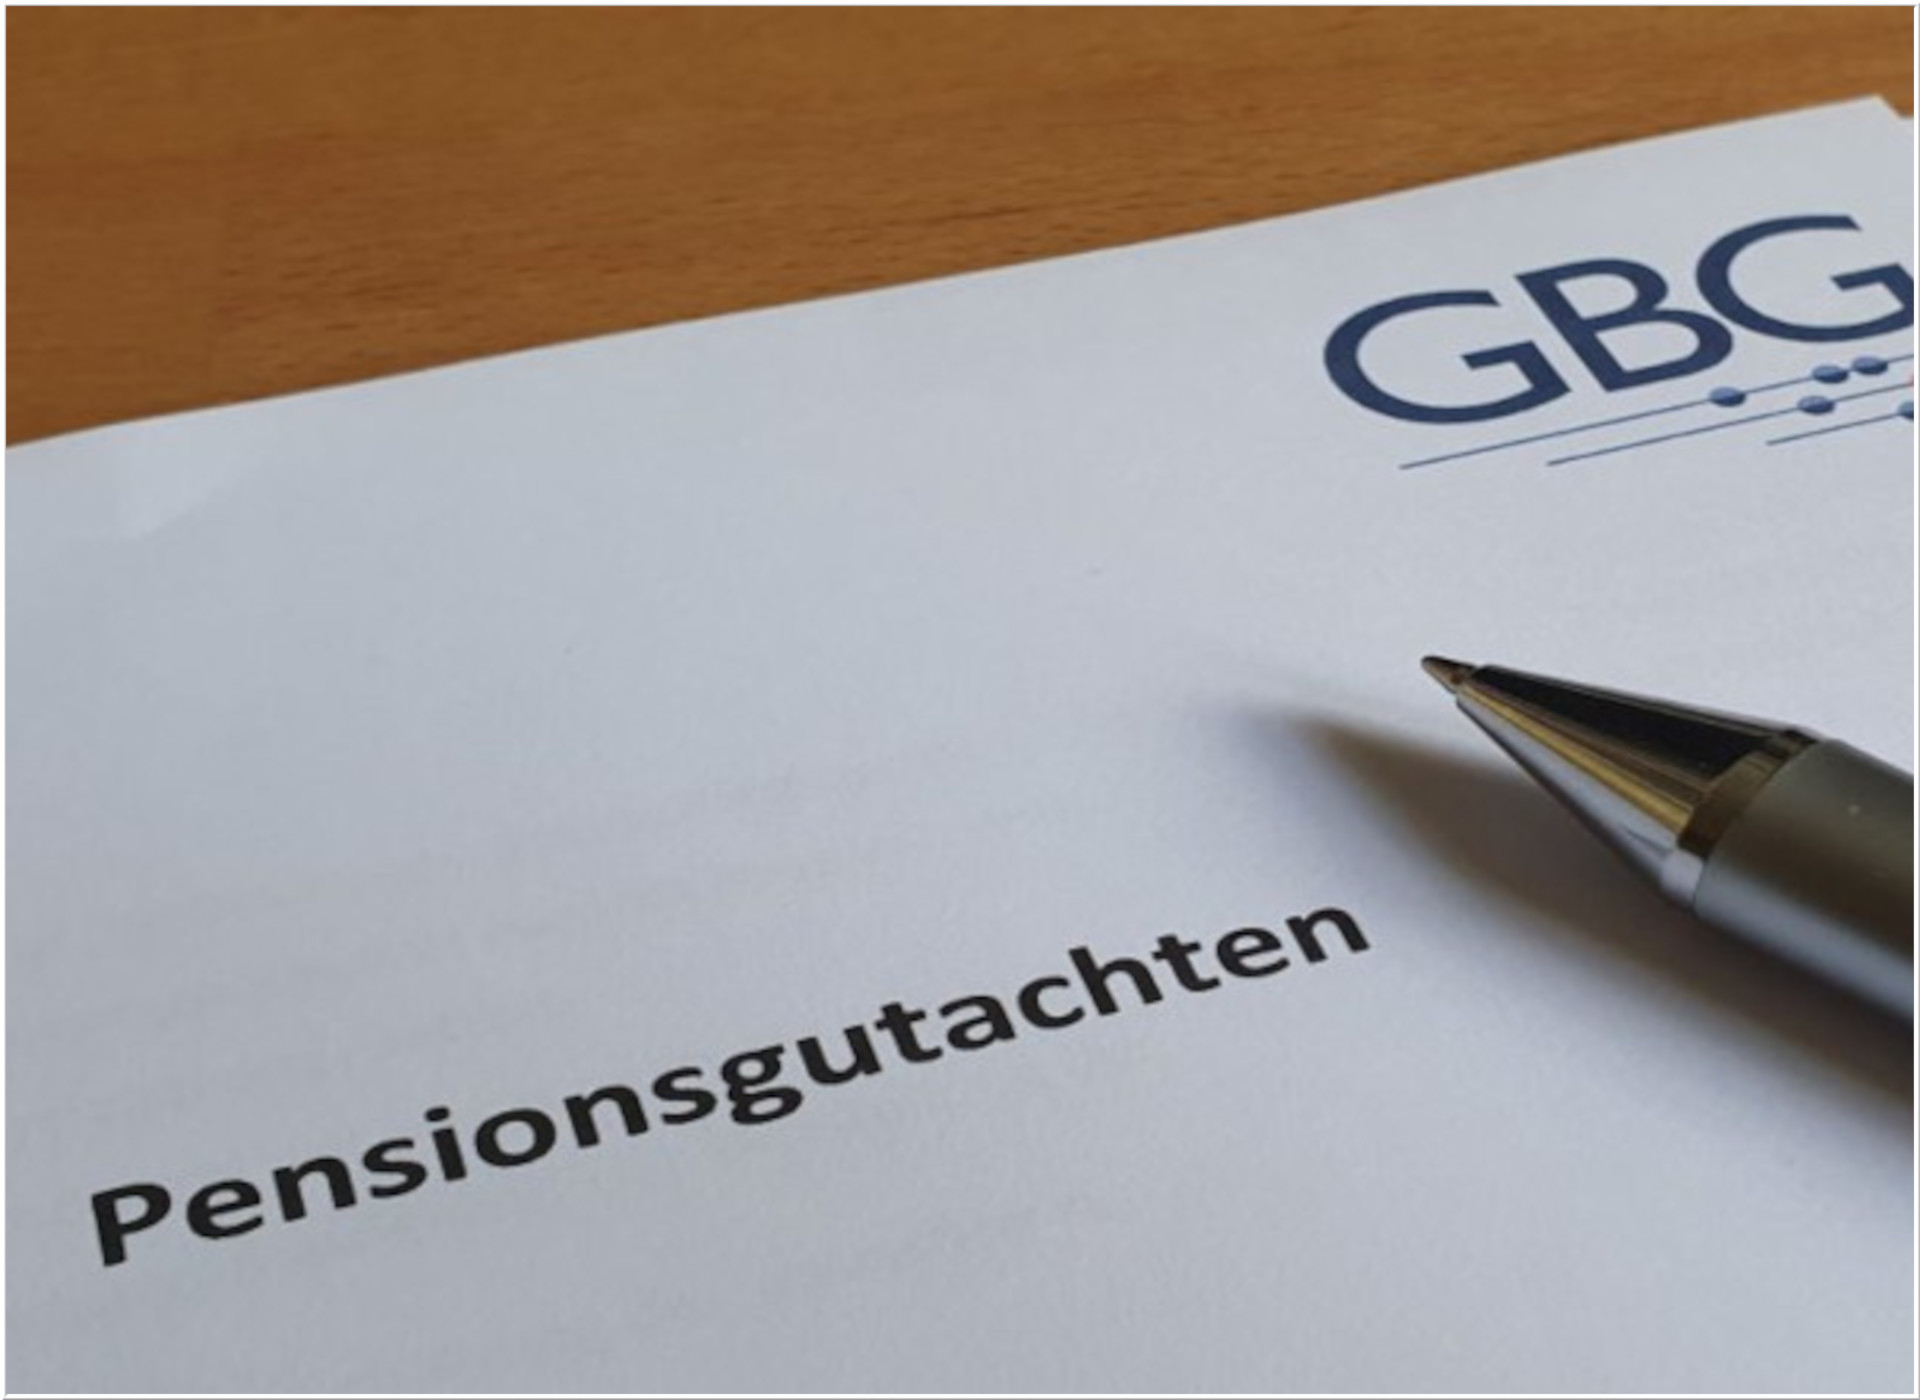 GBG Pensionsgutachten - Versicherungsmathematische Gutachten